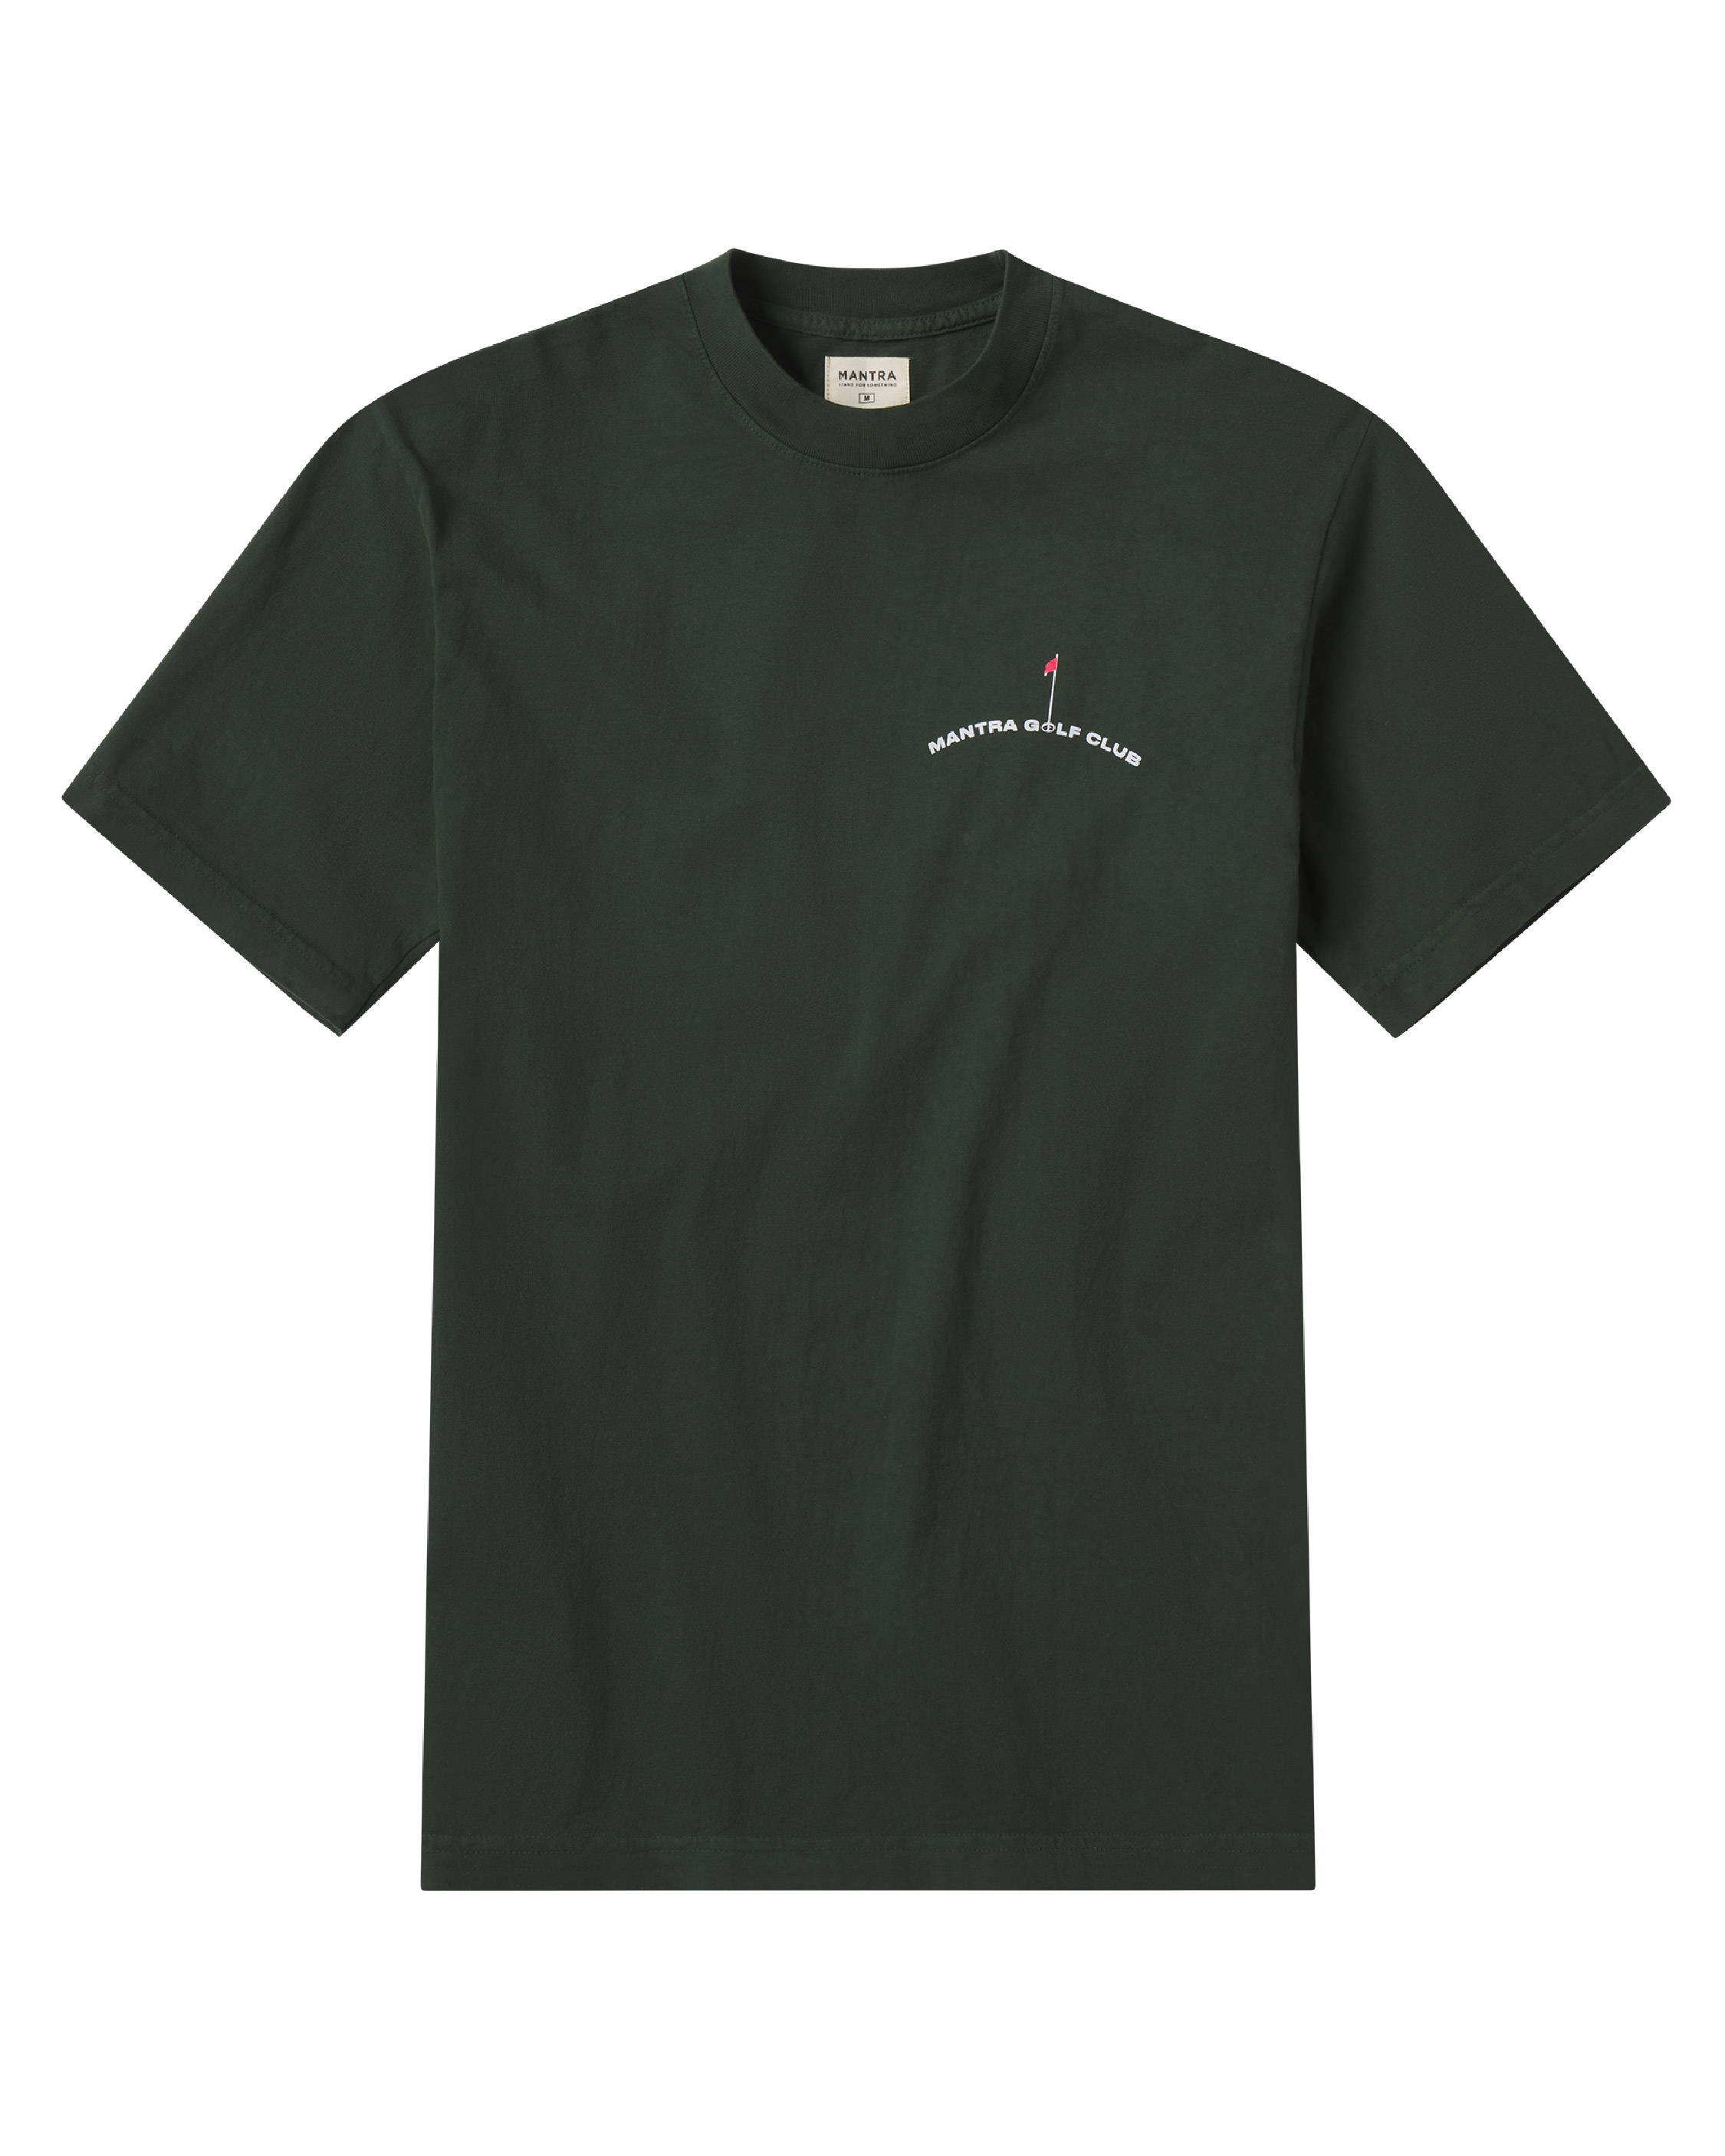 Graphic T-Shirt | Fruitland Nurseries | Green color selector